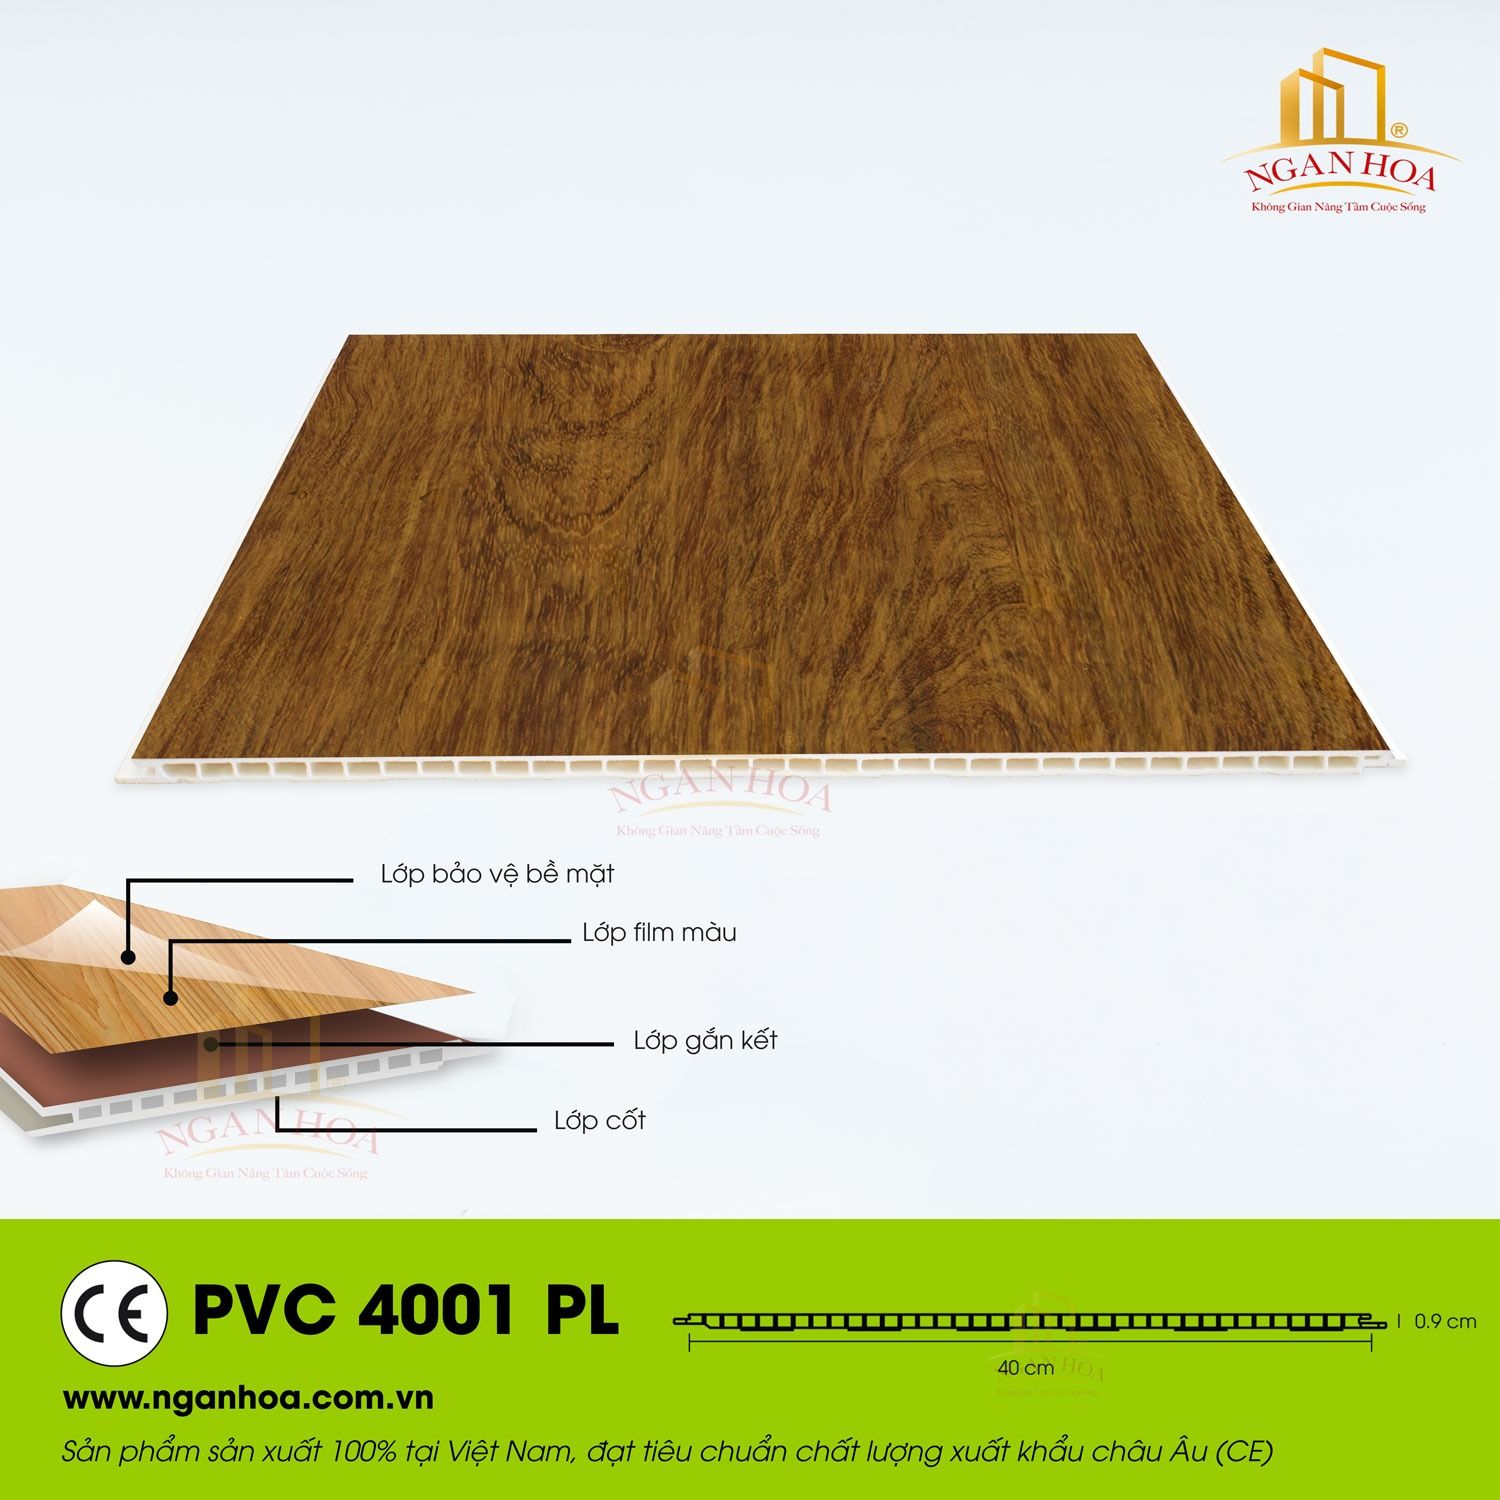 PVC-4001-PL